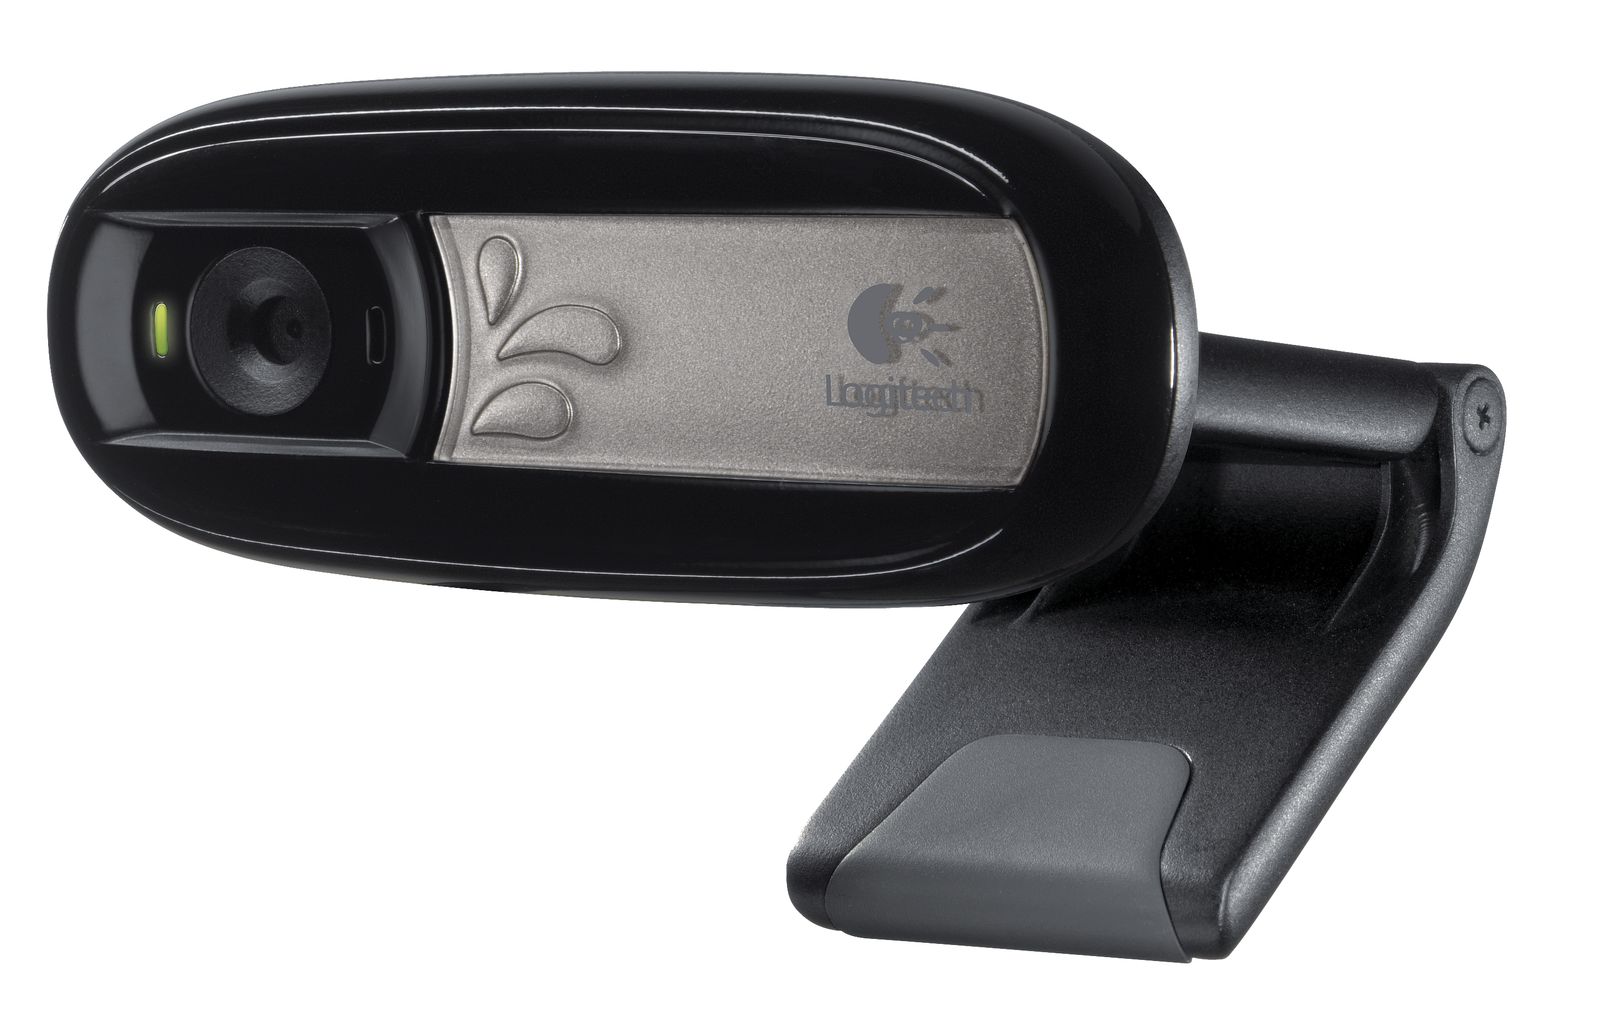 Logitech C170 Webcam 5 MP 640 x 480 Pixel USB 2.0 Schwarz